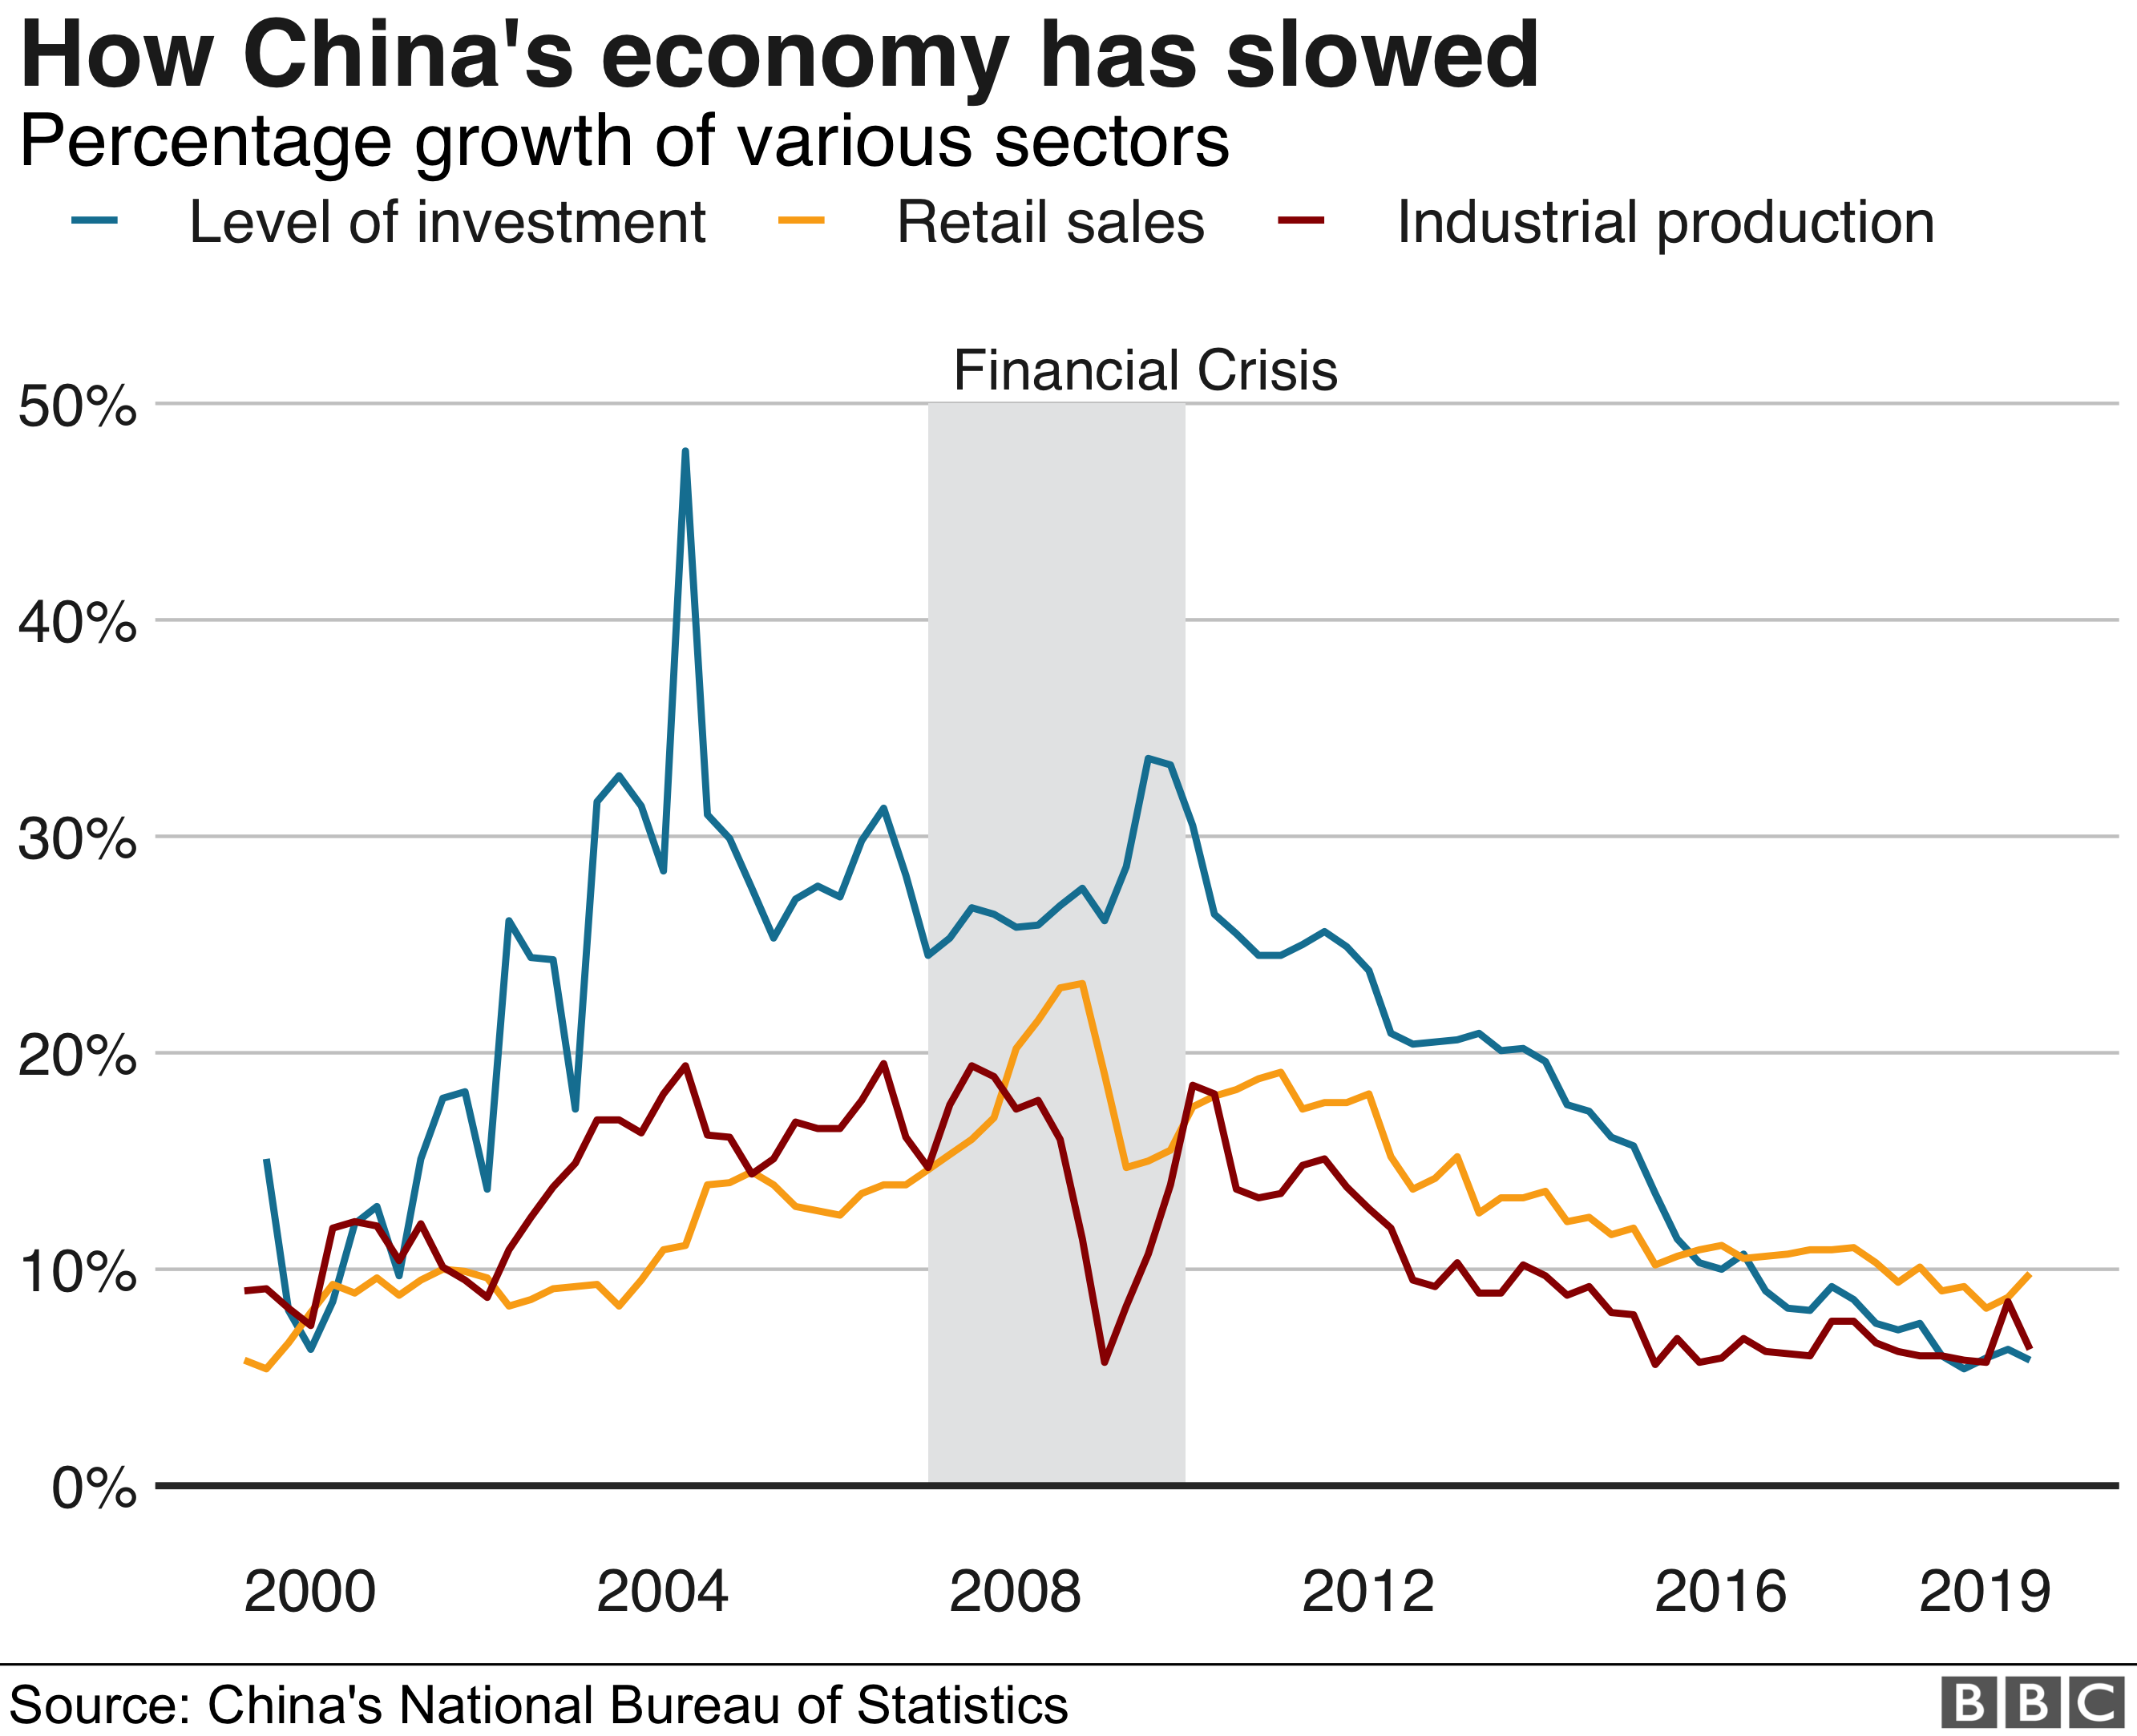 China's economic performance